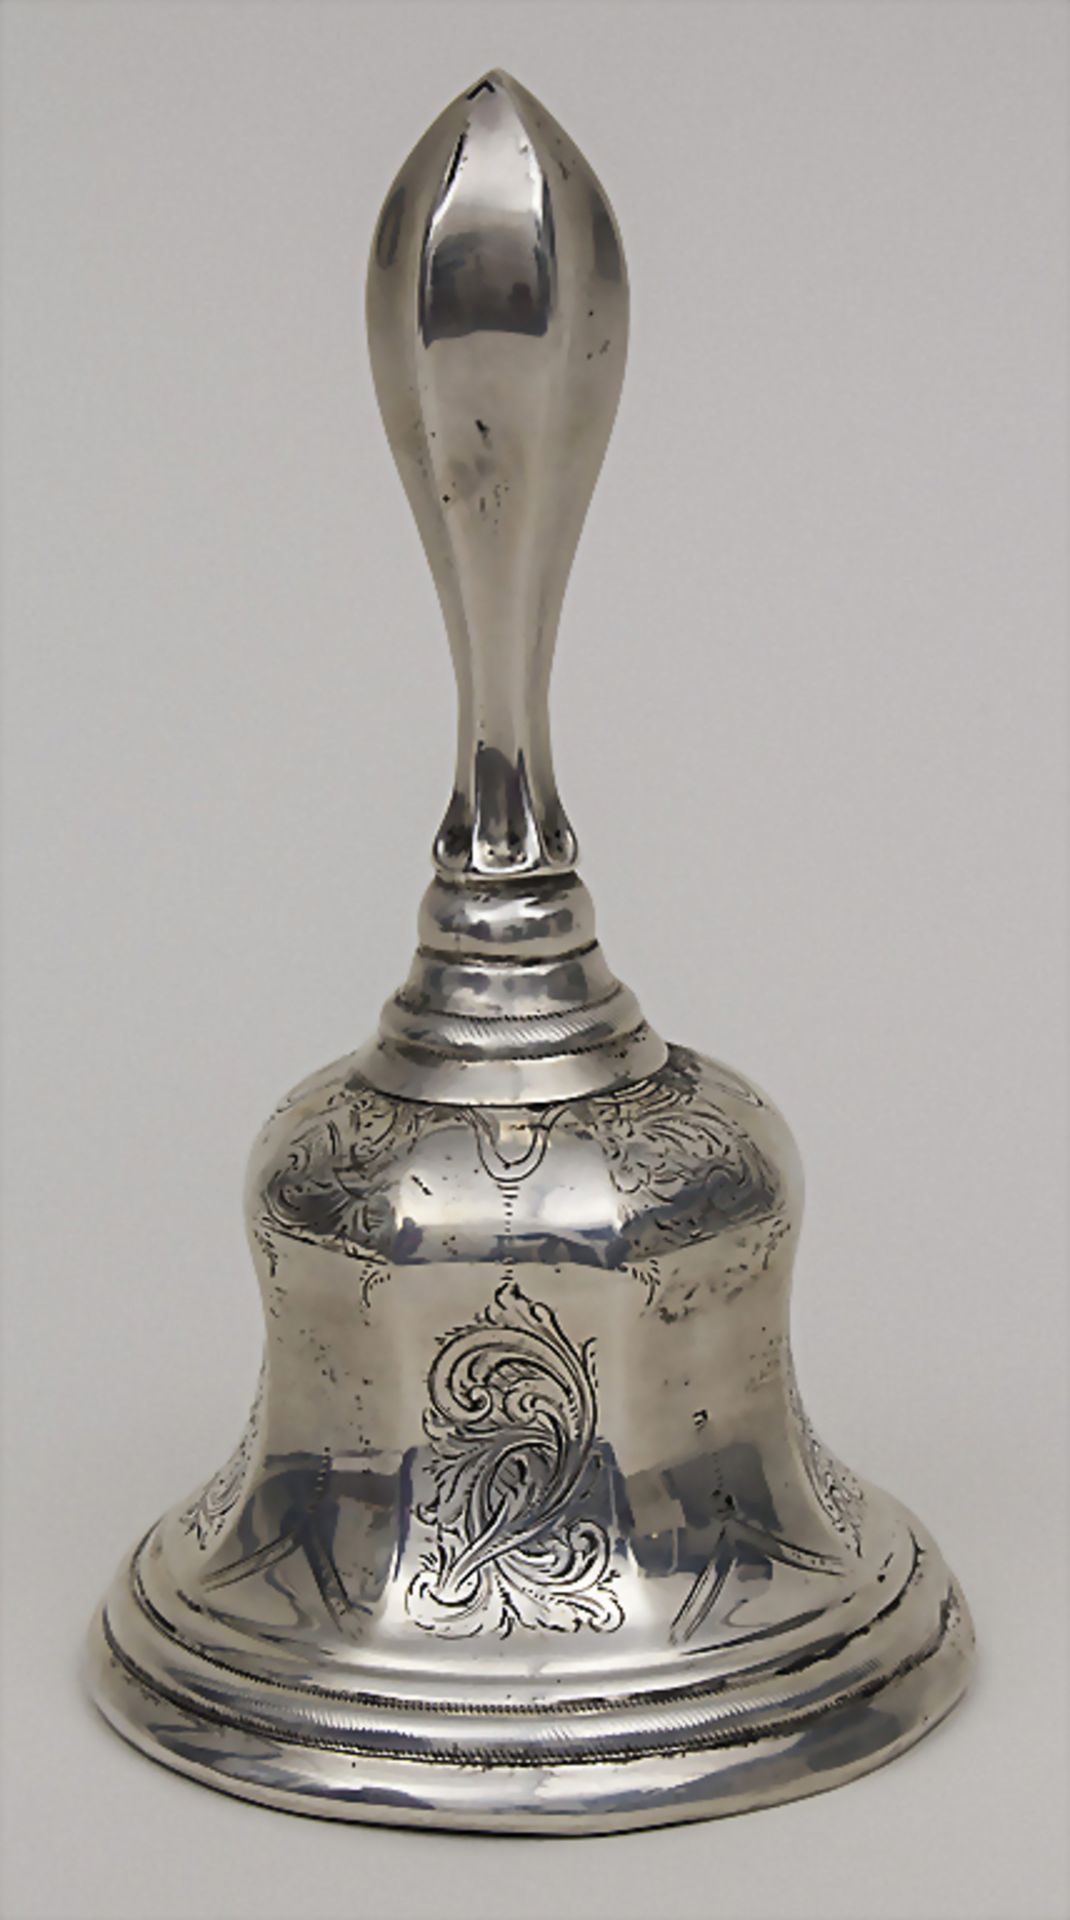 Tischglocke / A silver table bell, Niederlande / Netherlands, 1847Material: Silber, 83